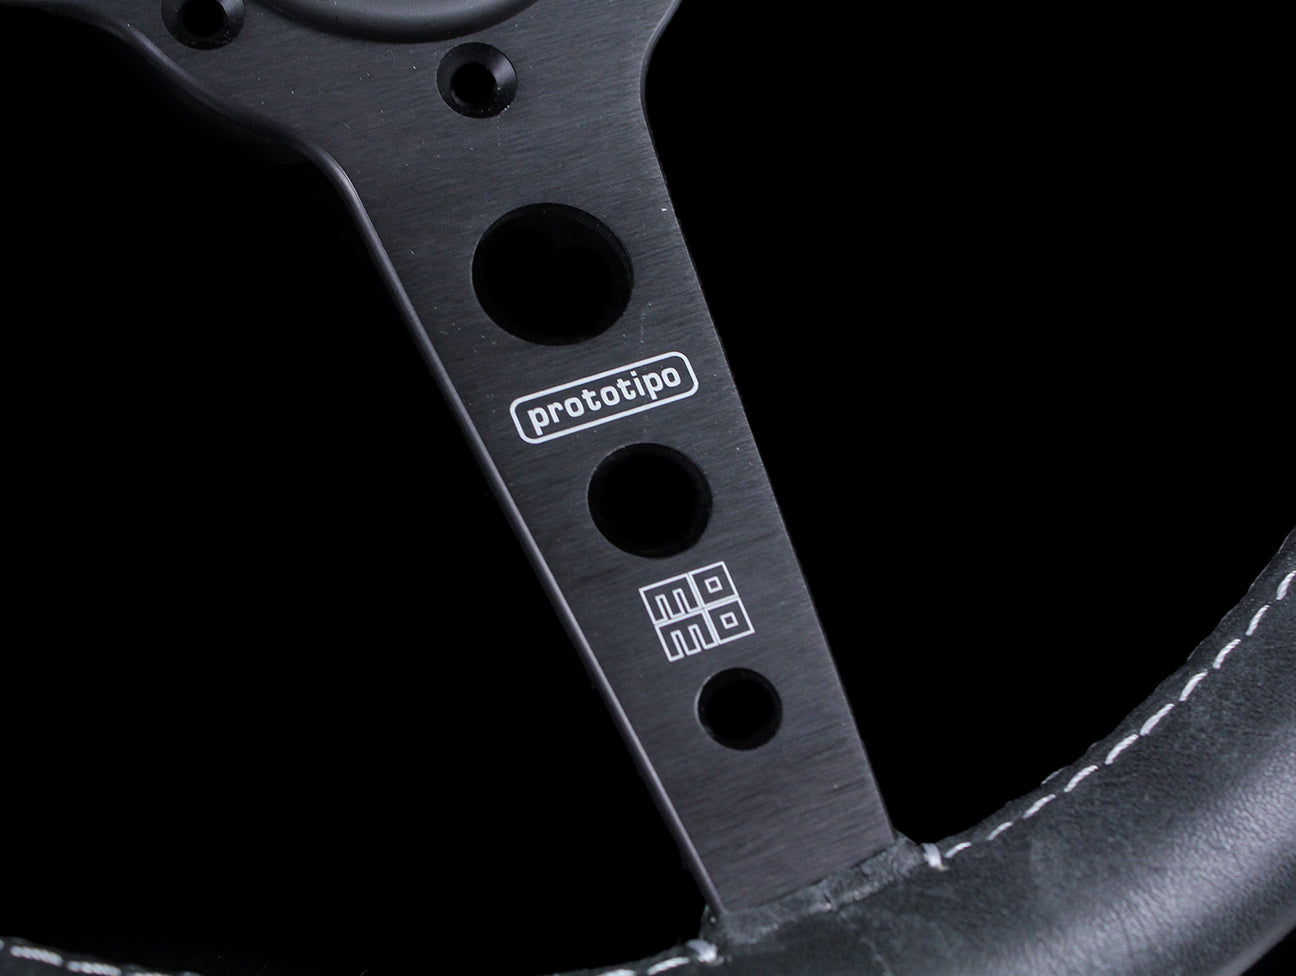 Momo 350mm Prototipo Heritage Steering Wheel